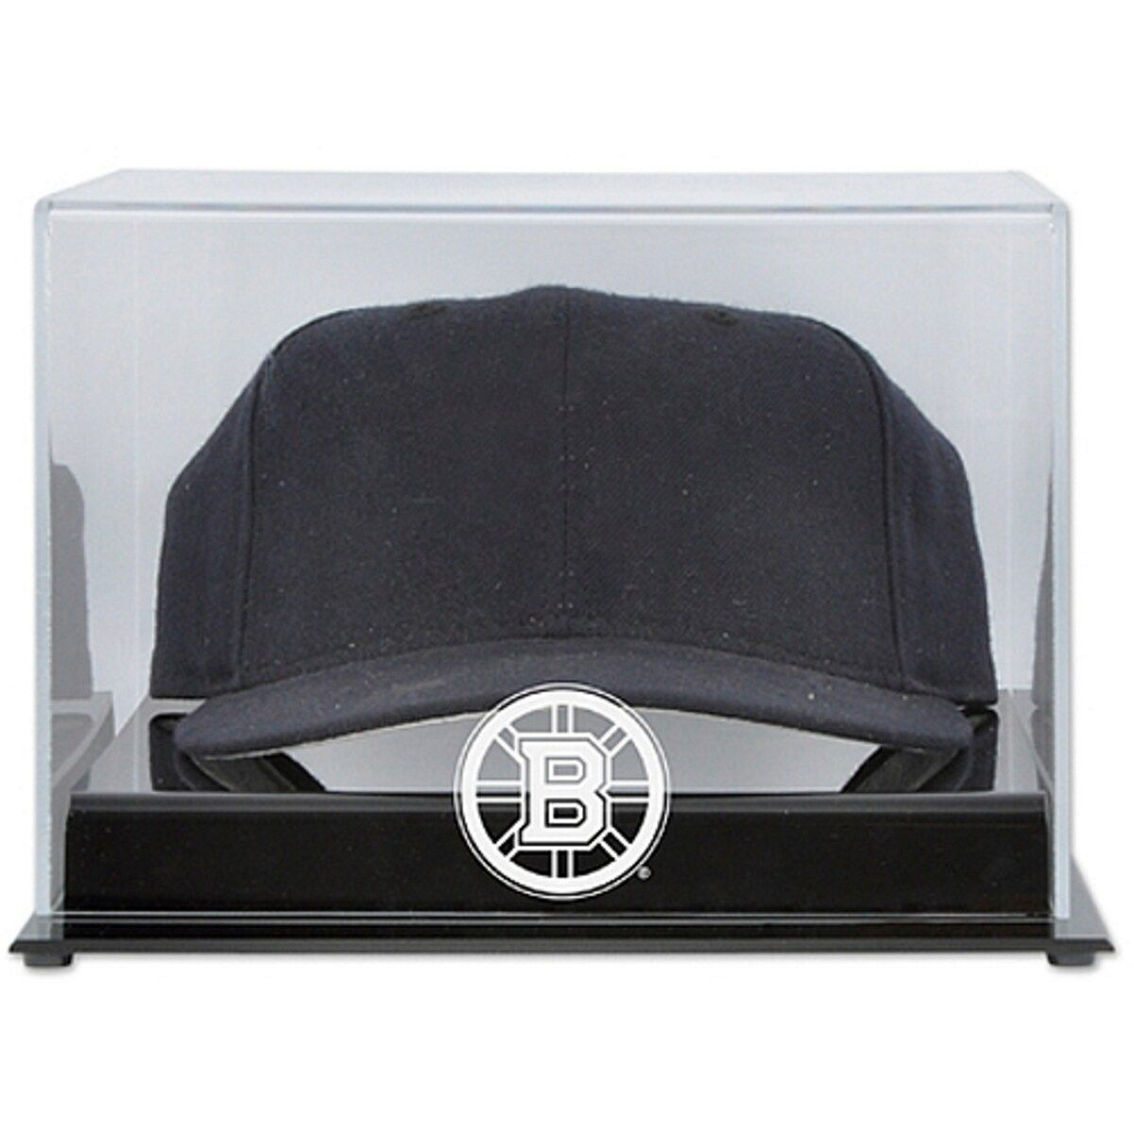 Fanatics Authentic Boston Bruins Acrylic Team Logo Cap Display Case - Image 2 of 2